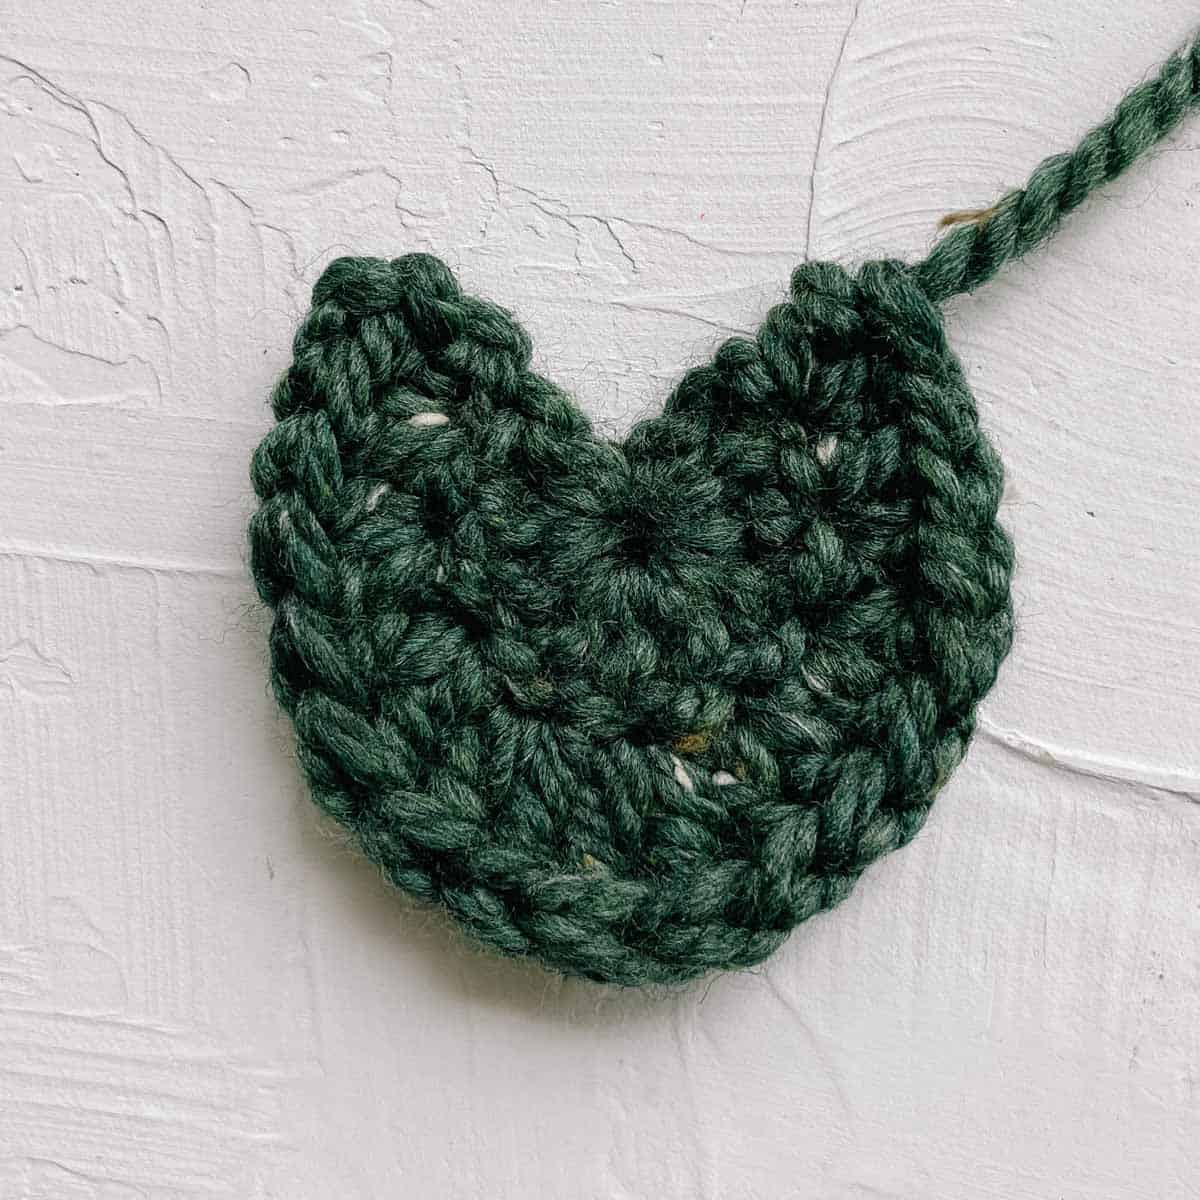 A green pumpkin leaf crocheted with chunky yarn.